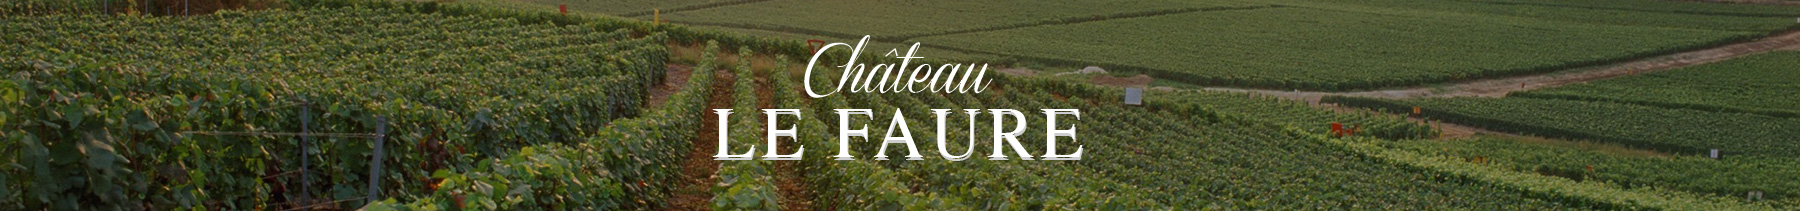 Château Le Faure